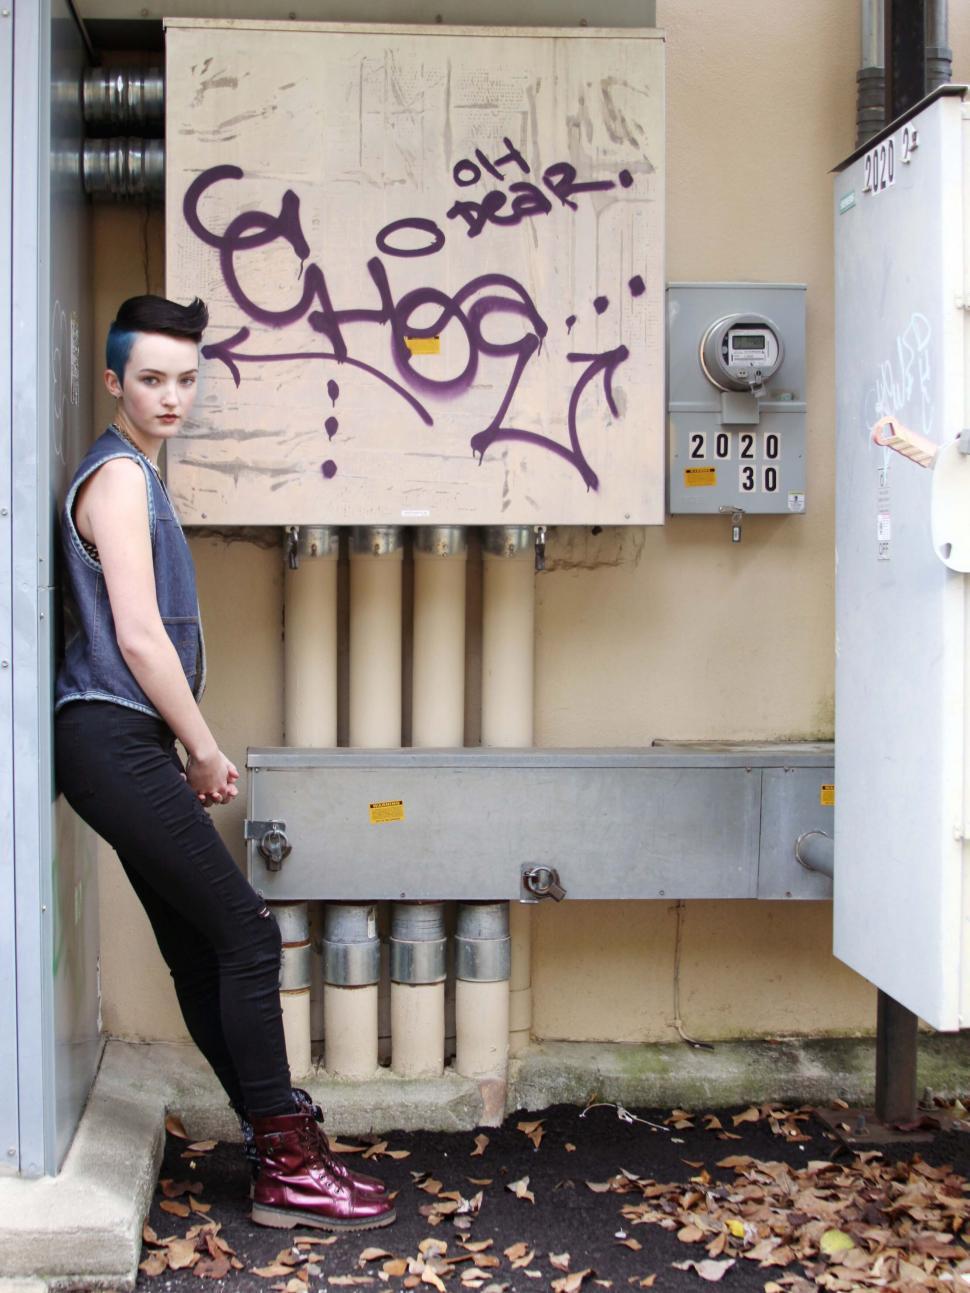 Free Image of Urban style model posing by graffiti wall 